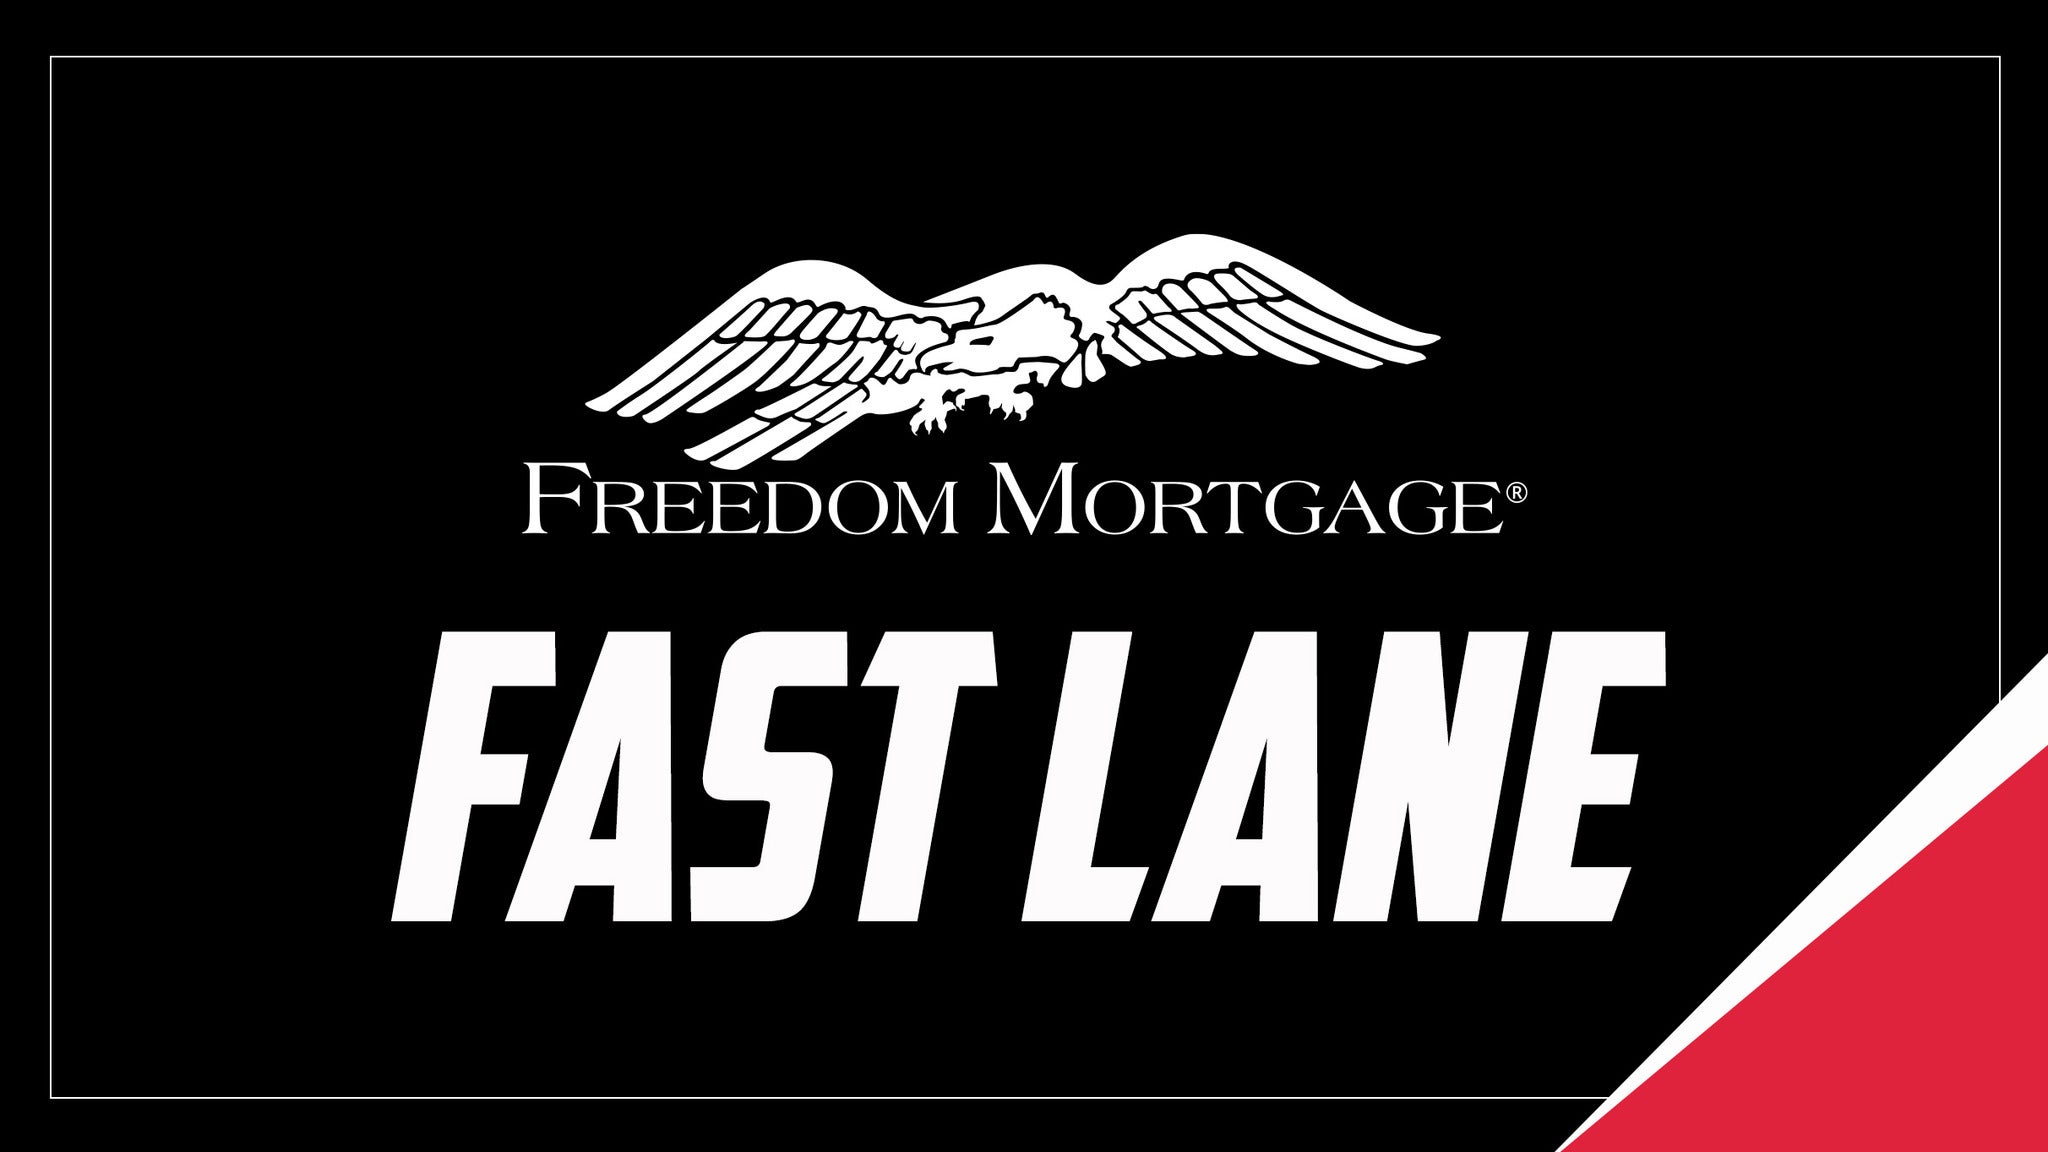 Freedom Mortgage Fast Lane presale information on freepresalepasswords.com